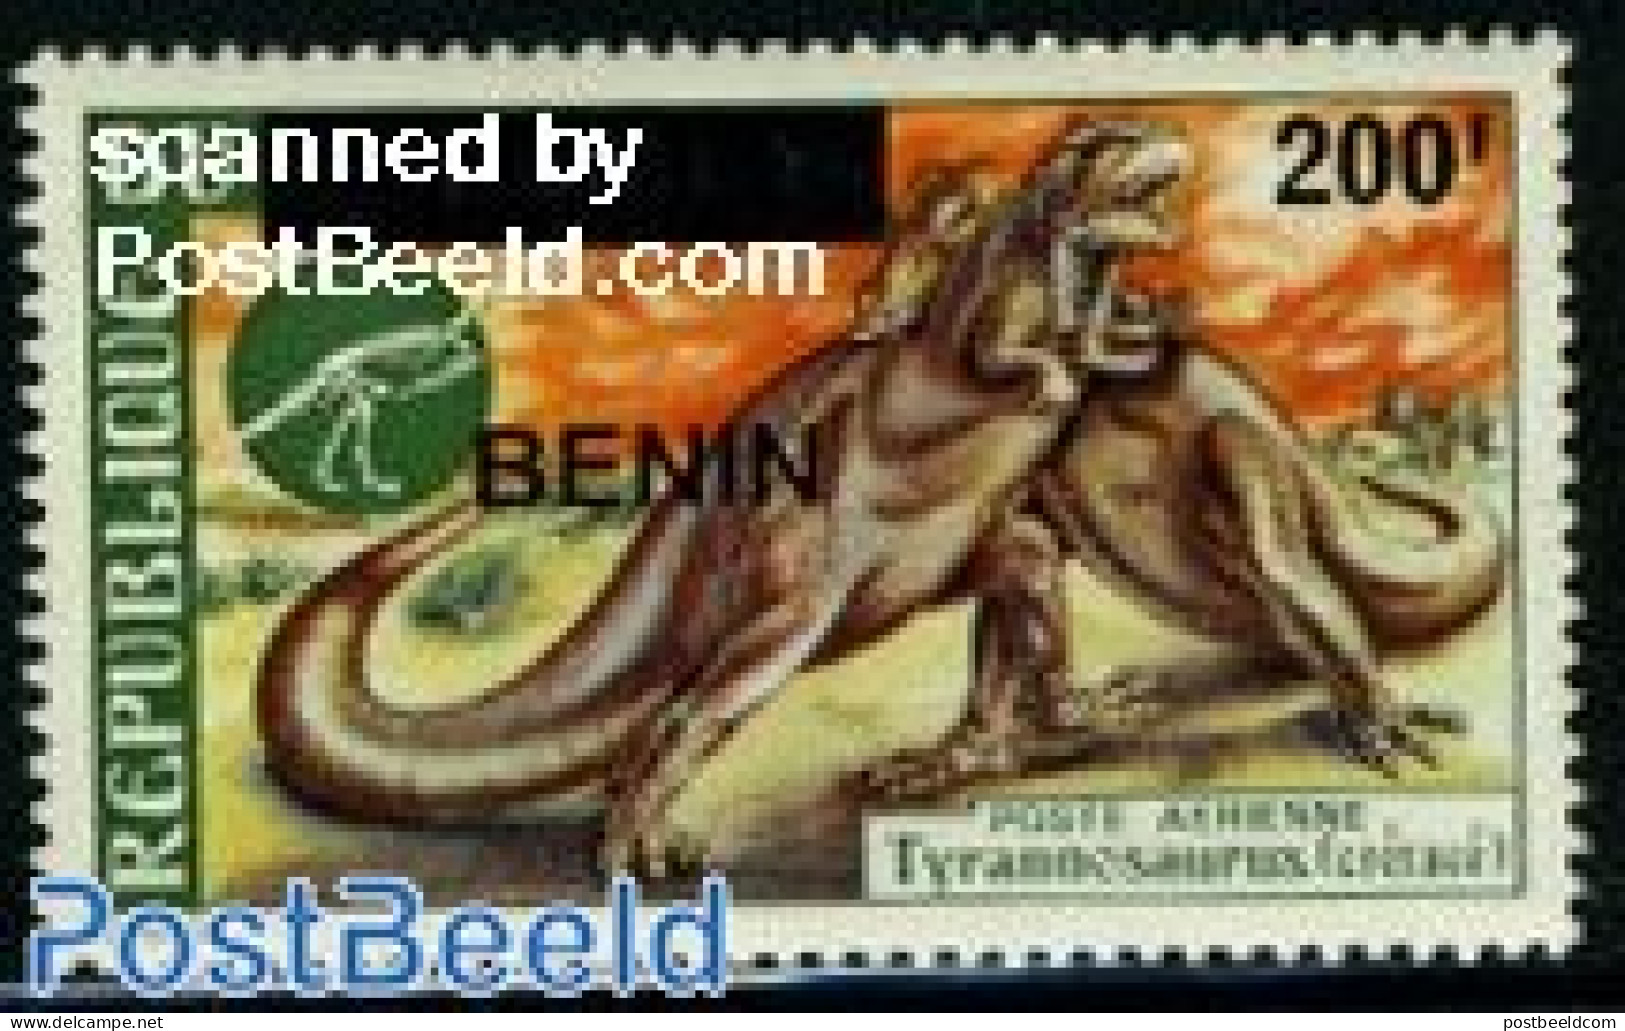 Benin 2008 Preh. Animal Overprint 1v, Mint NH, Nature - Prehistoric Animals - Unused Stamps